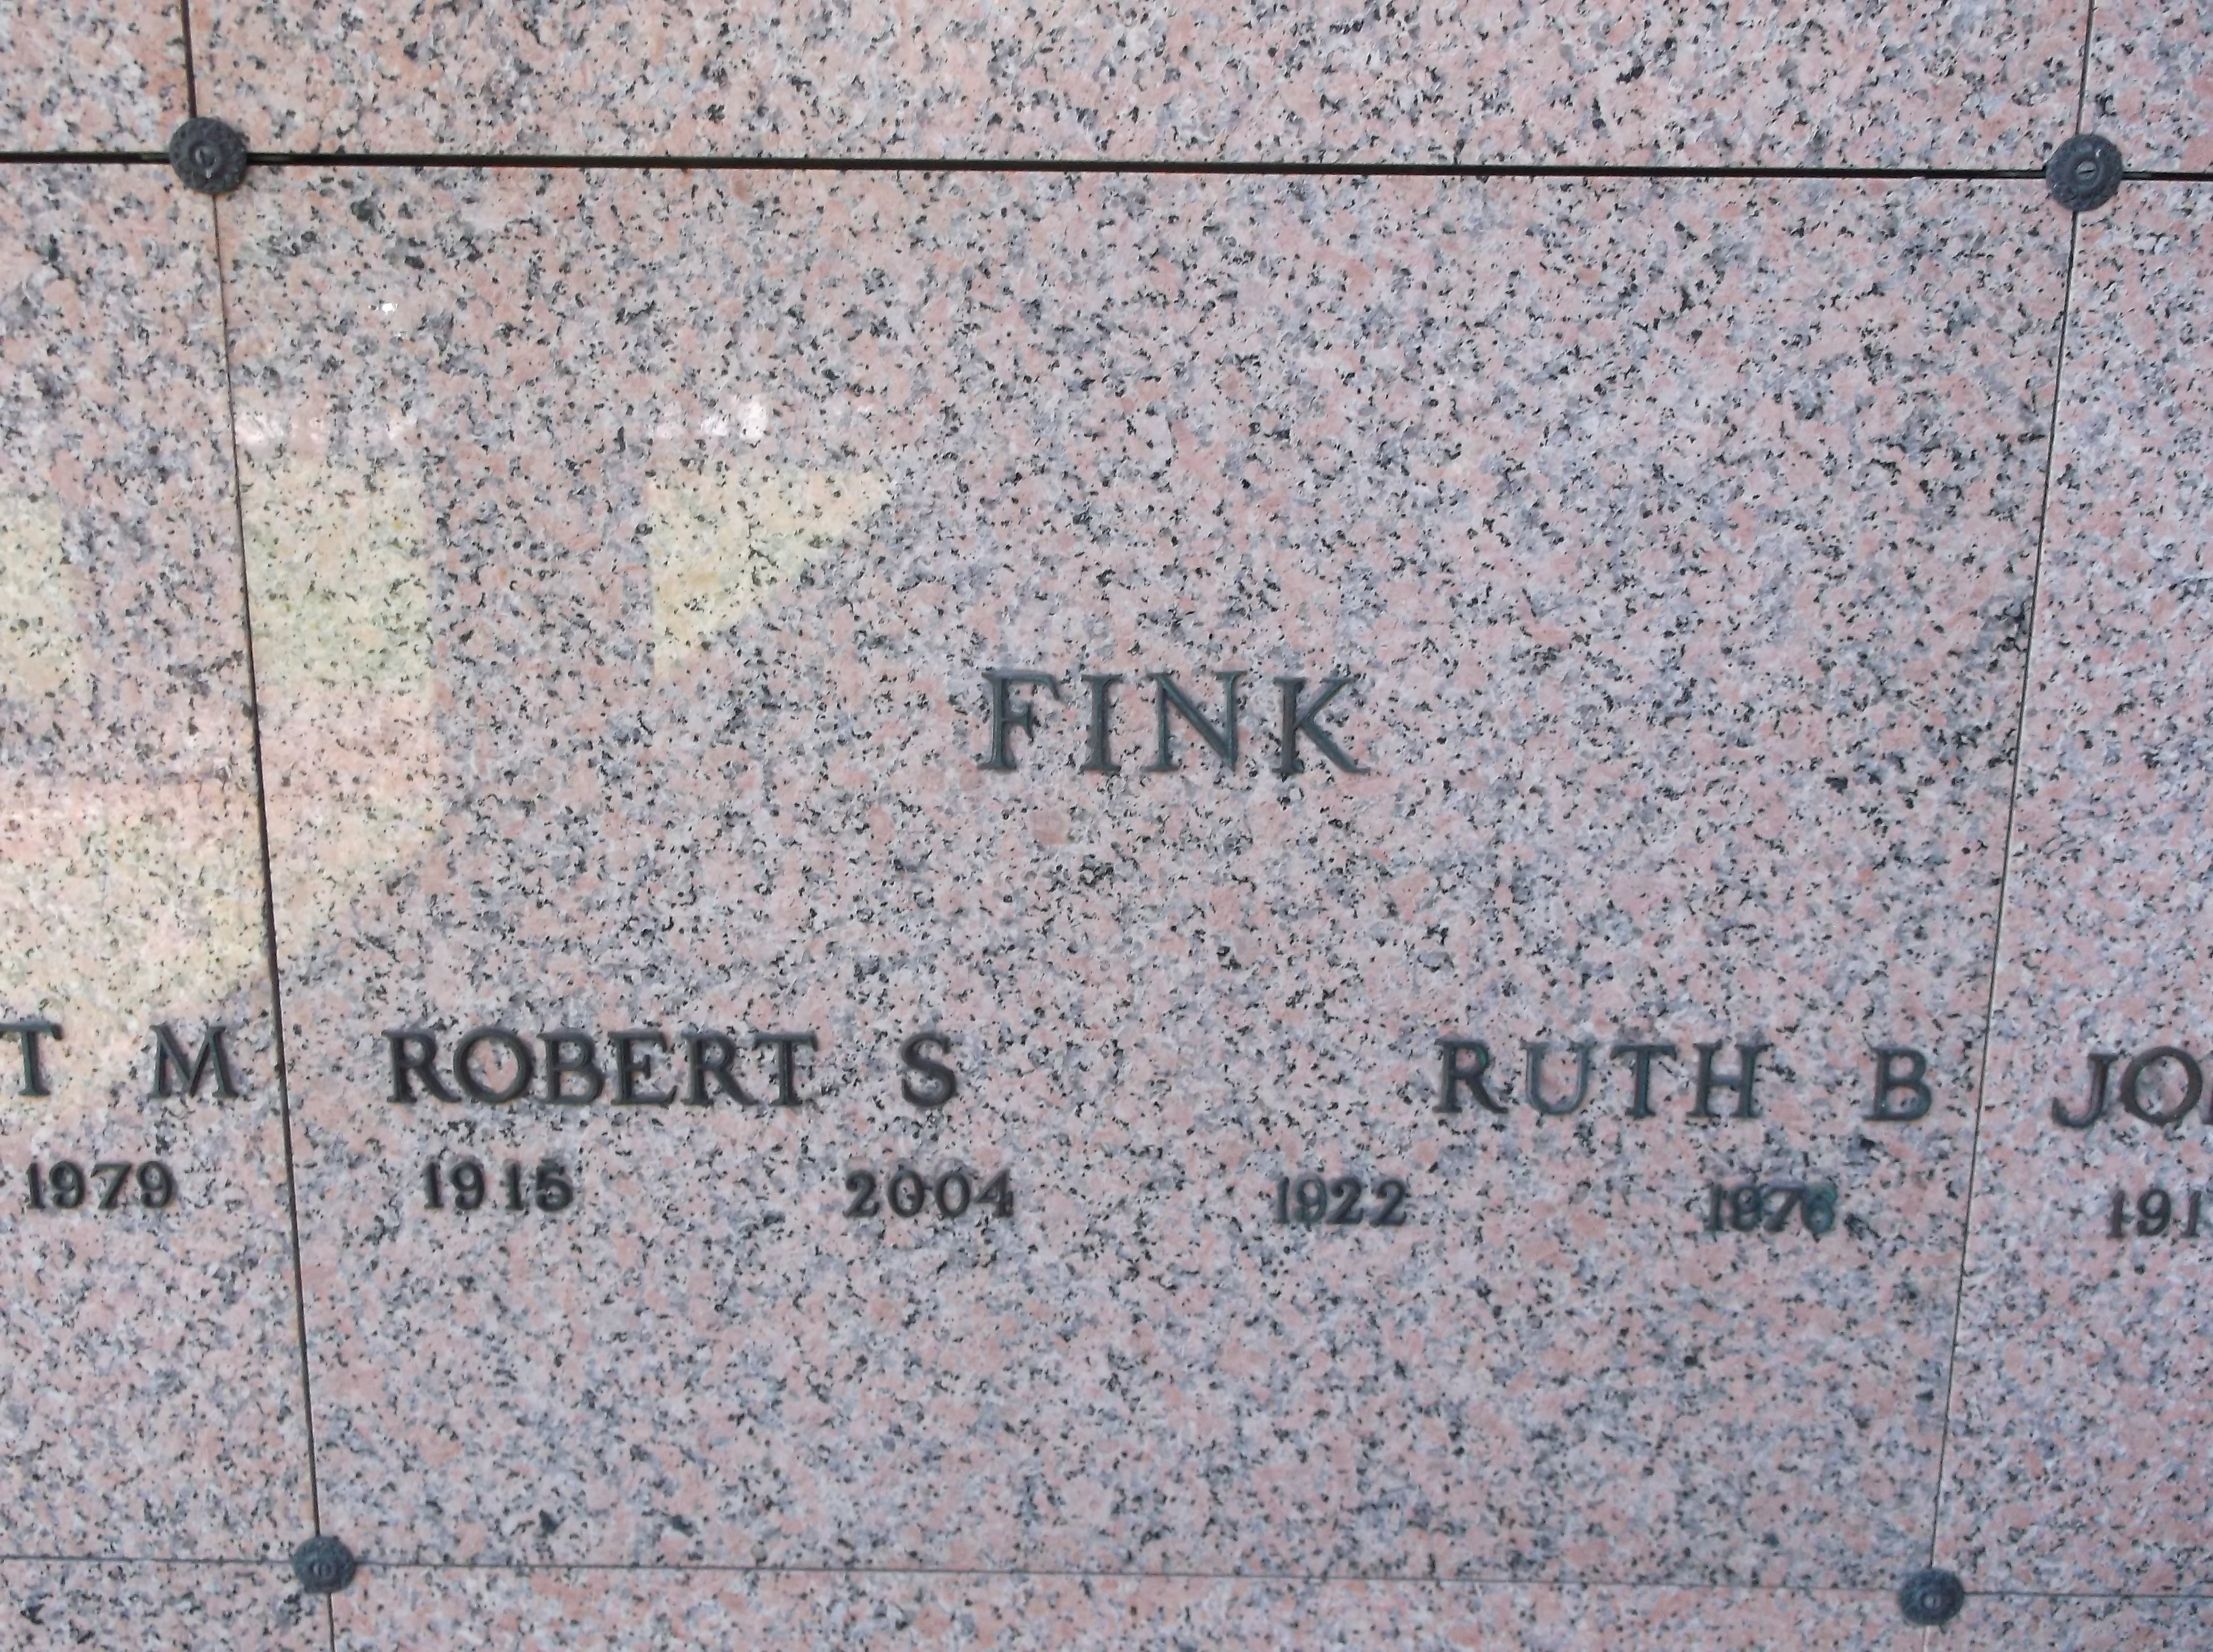 Ruth B Fink